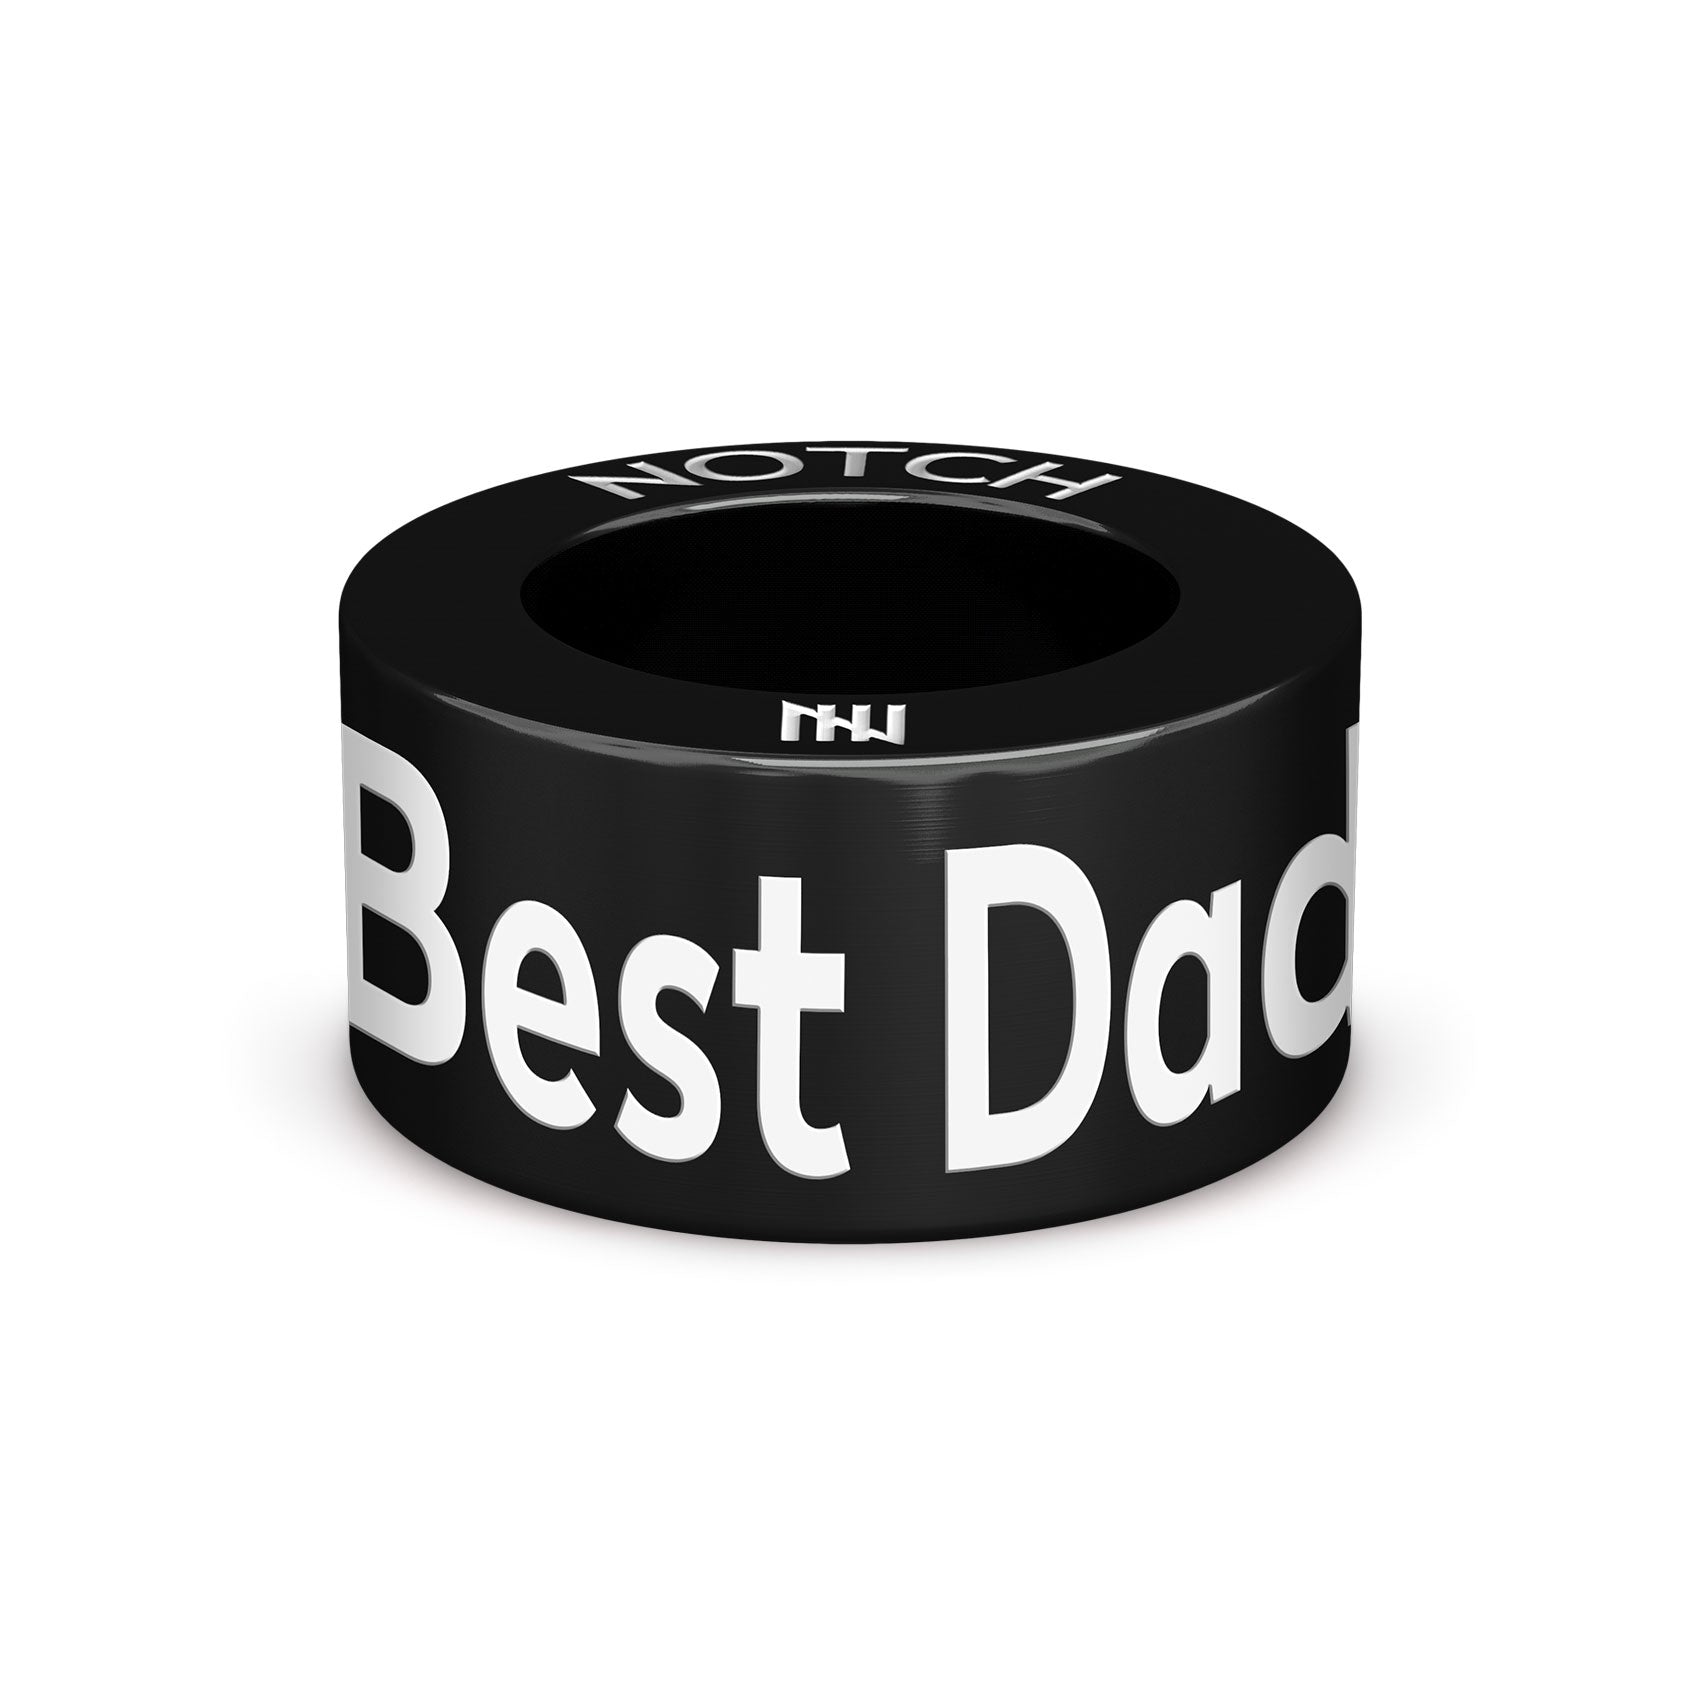 Best Dad NOTCH Charm